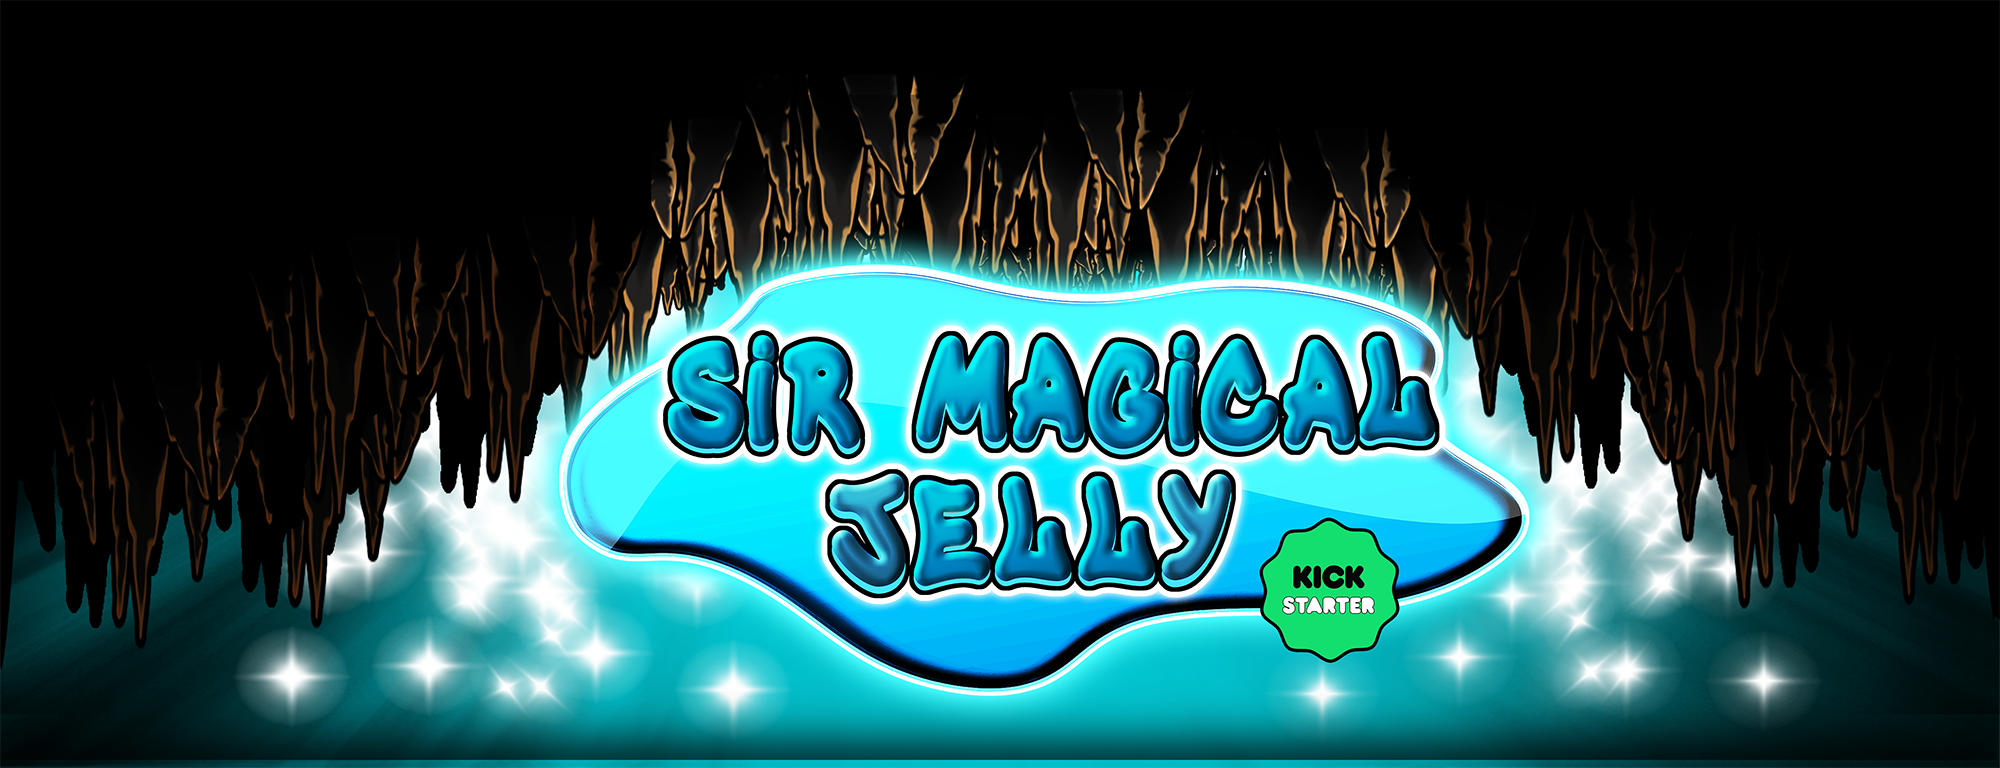 Sir Magical Jelly Demo - Kickstarter